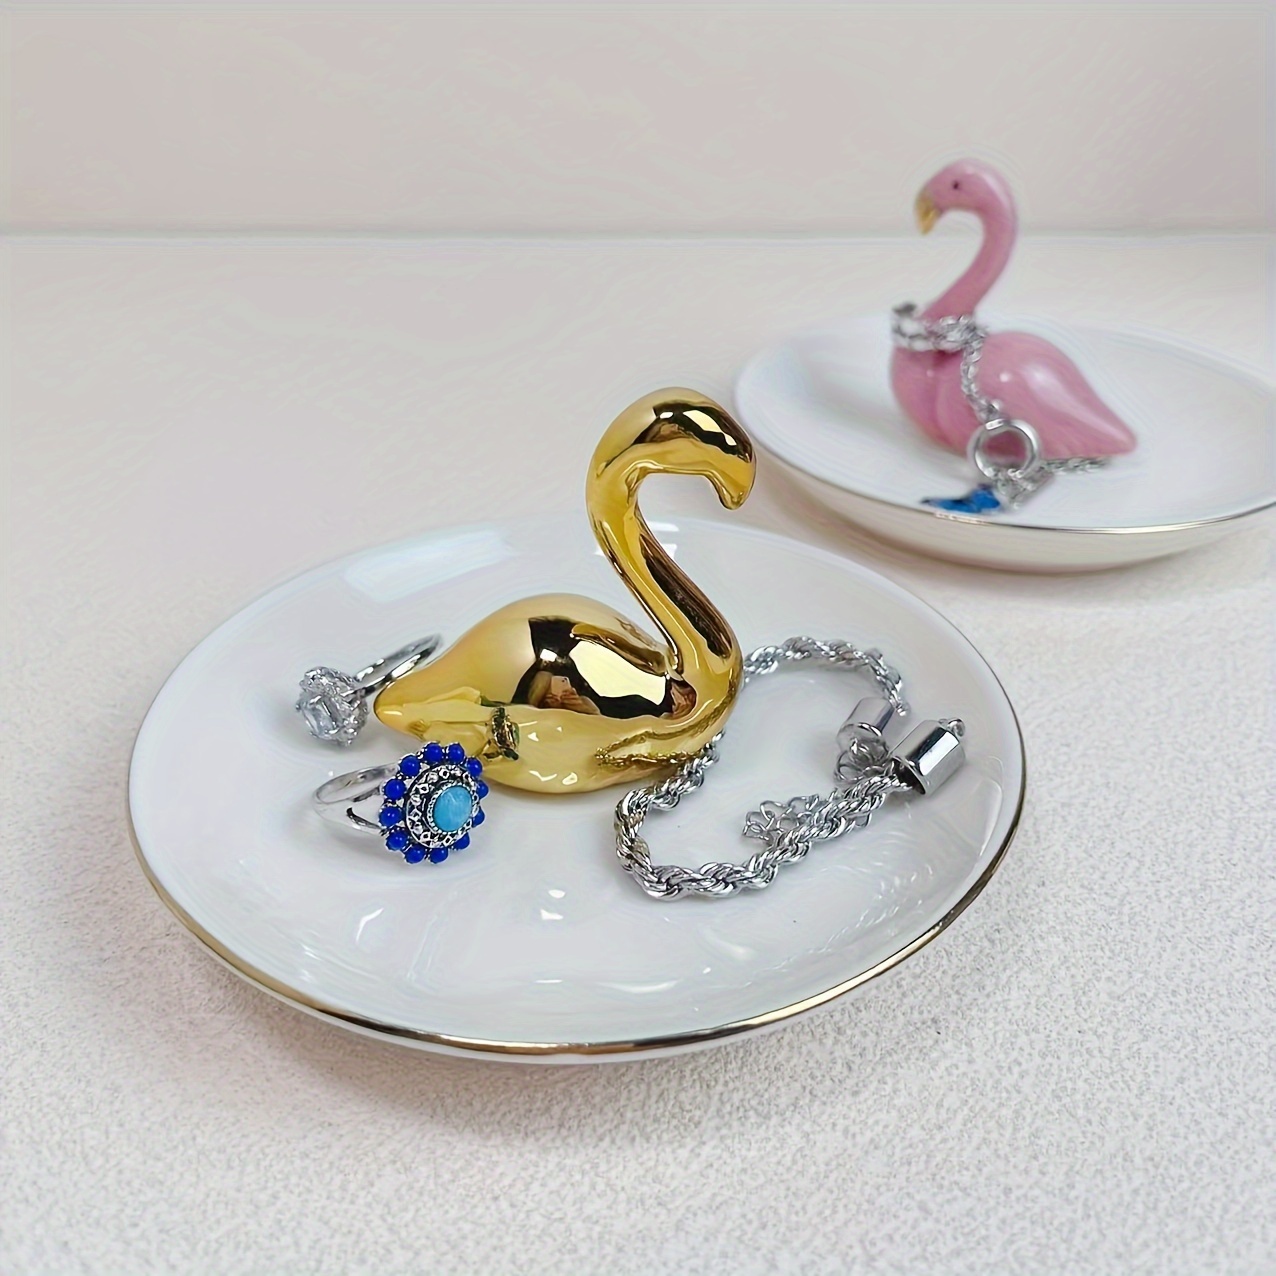 Shell Shape Ceramic Jewelry Tray Aqua Shell Trinket Dish Ceramic Ring  Earring Holder Ocean-themed Decorative Trinket Plate for Rings Earrings  Necklaces Bracelet Jewelry Watch Keys 